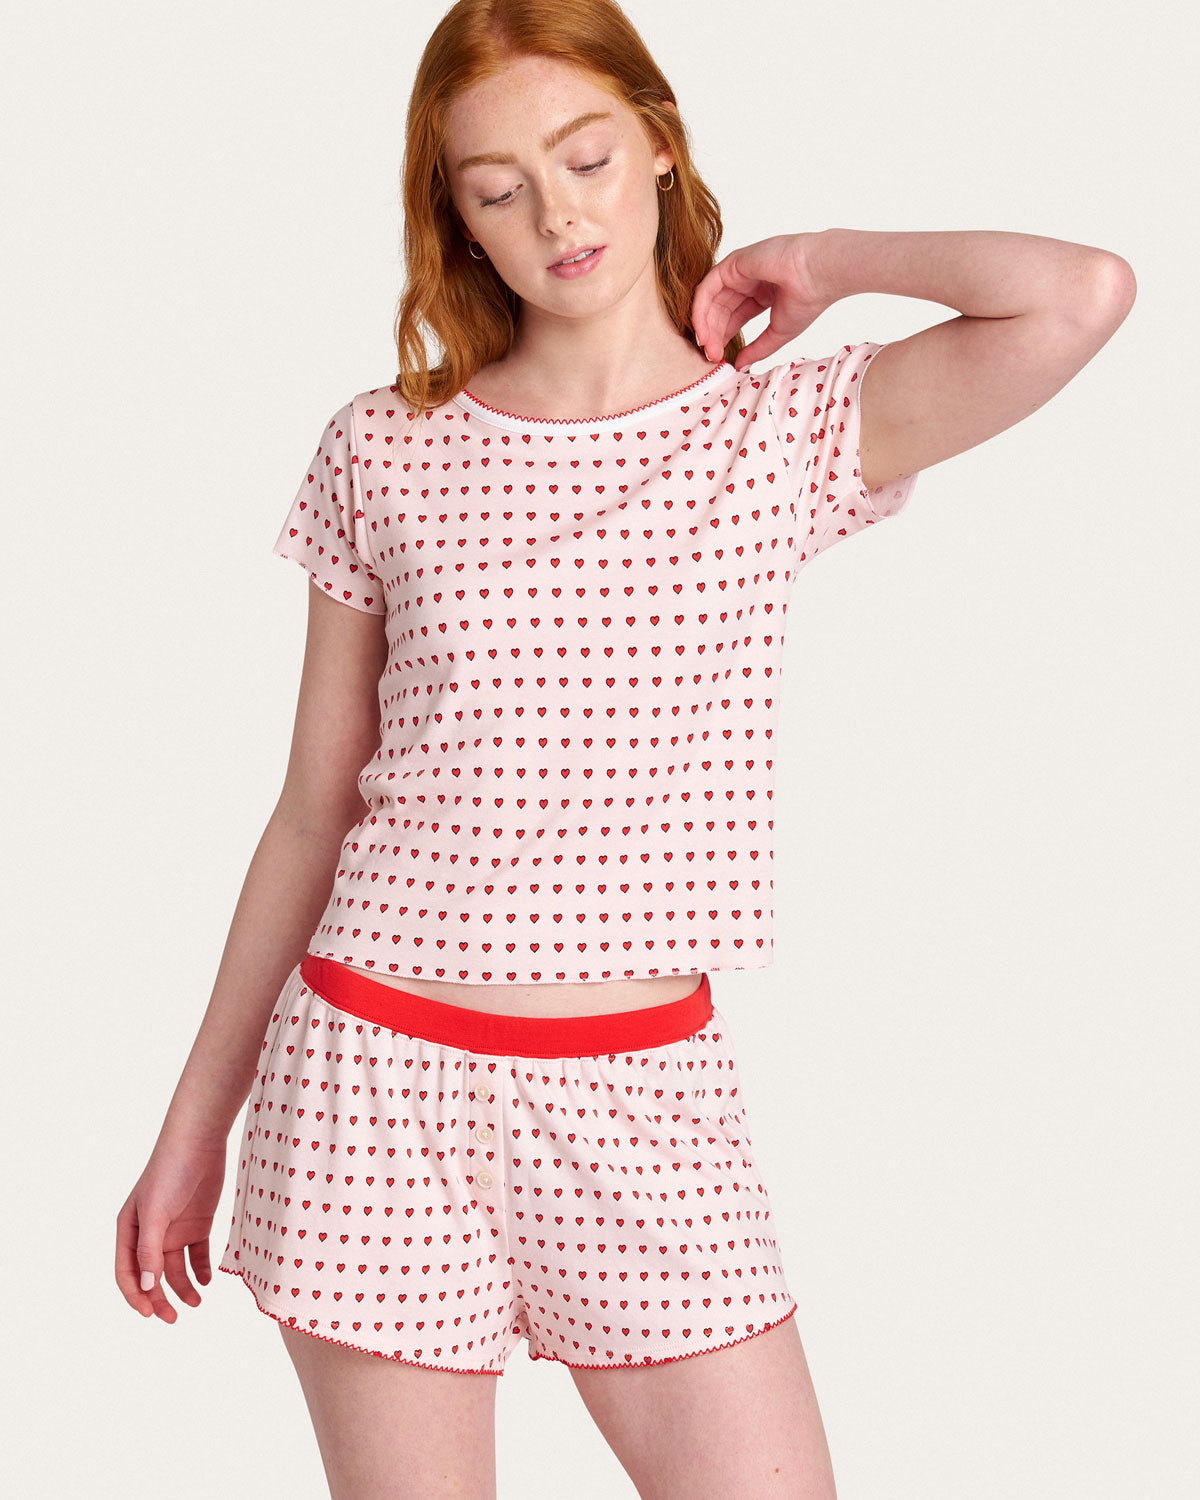 VENTELAN Pajama Set For Women Cute PJS Summer Short Poland